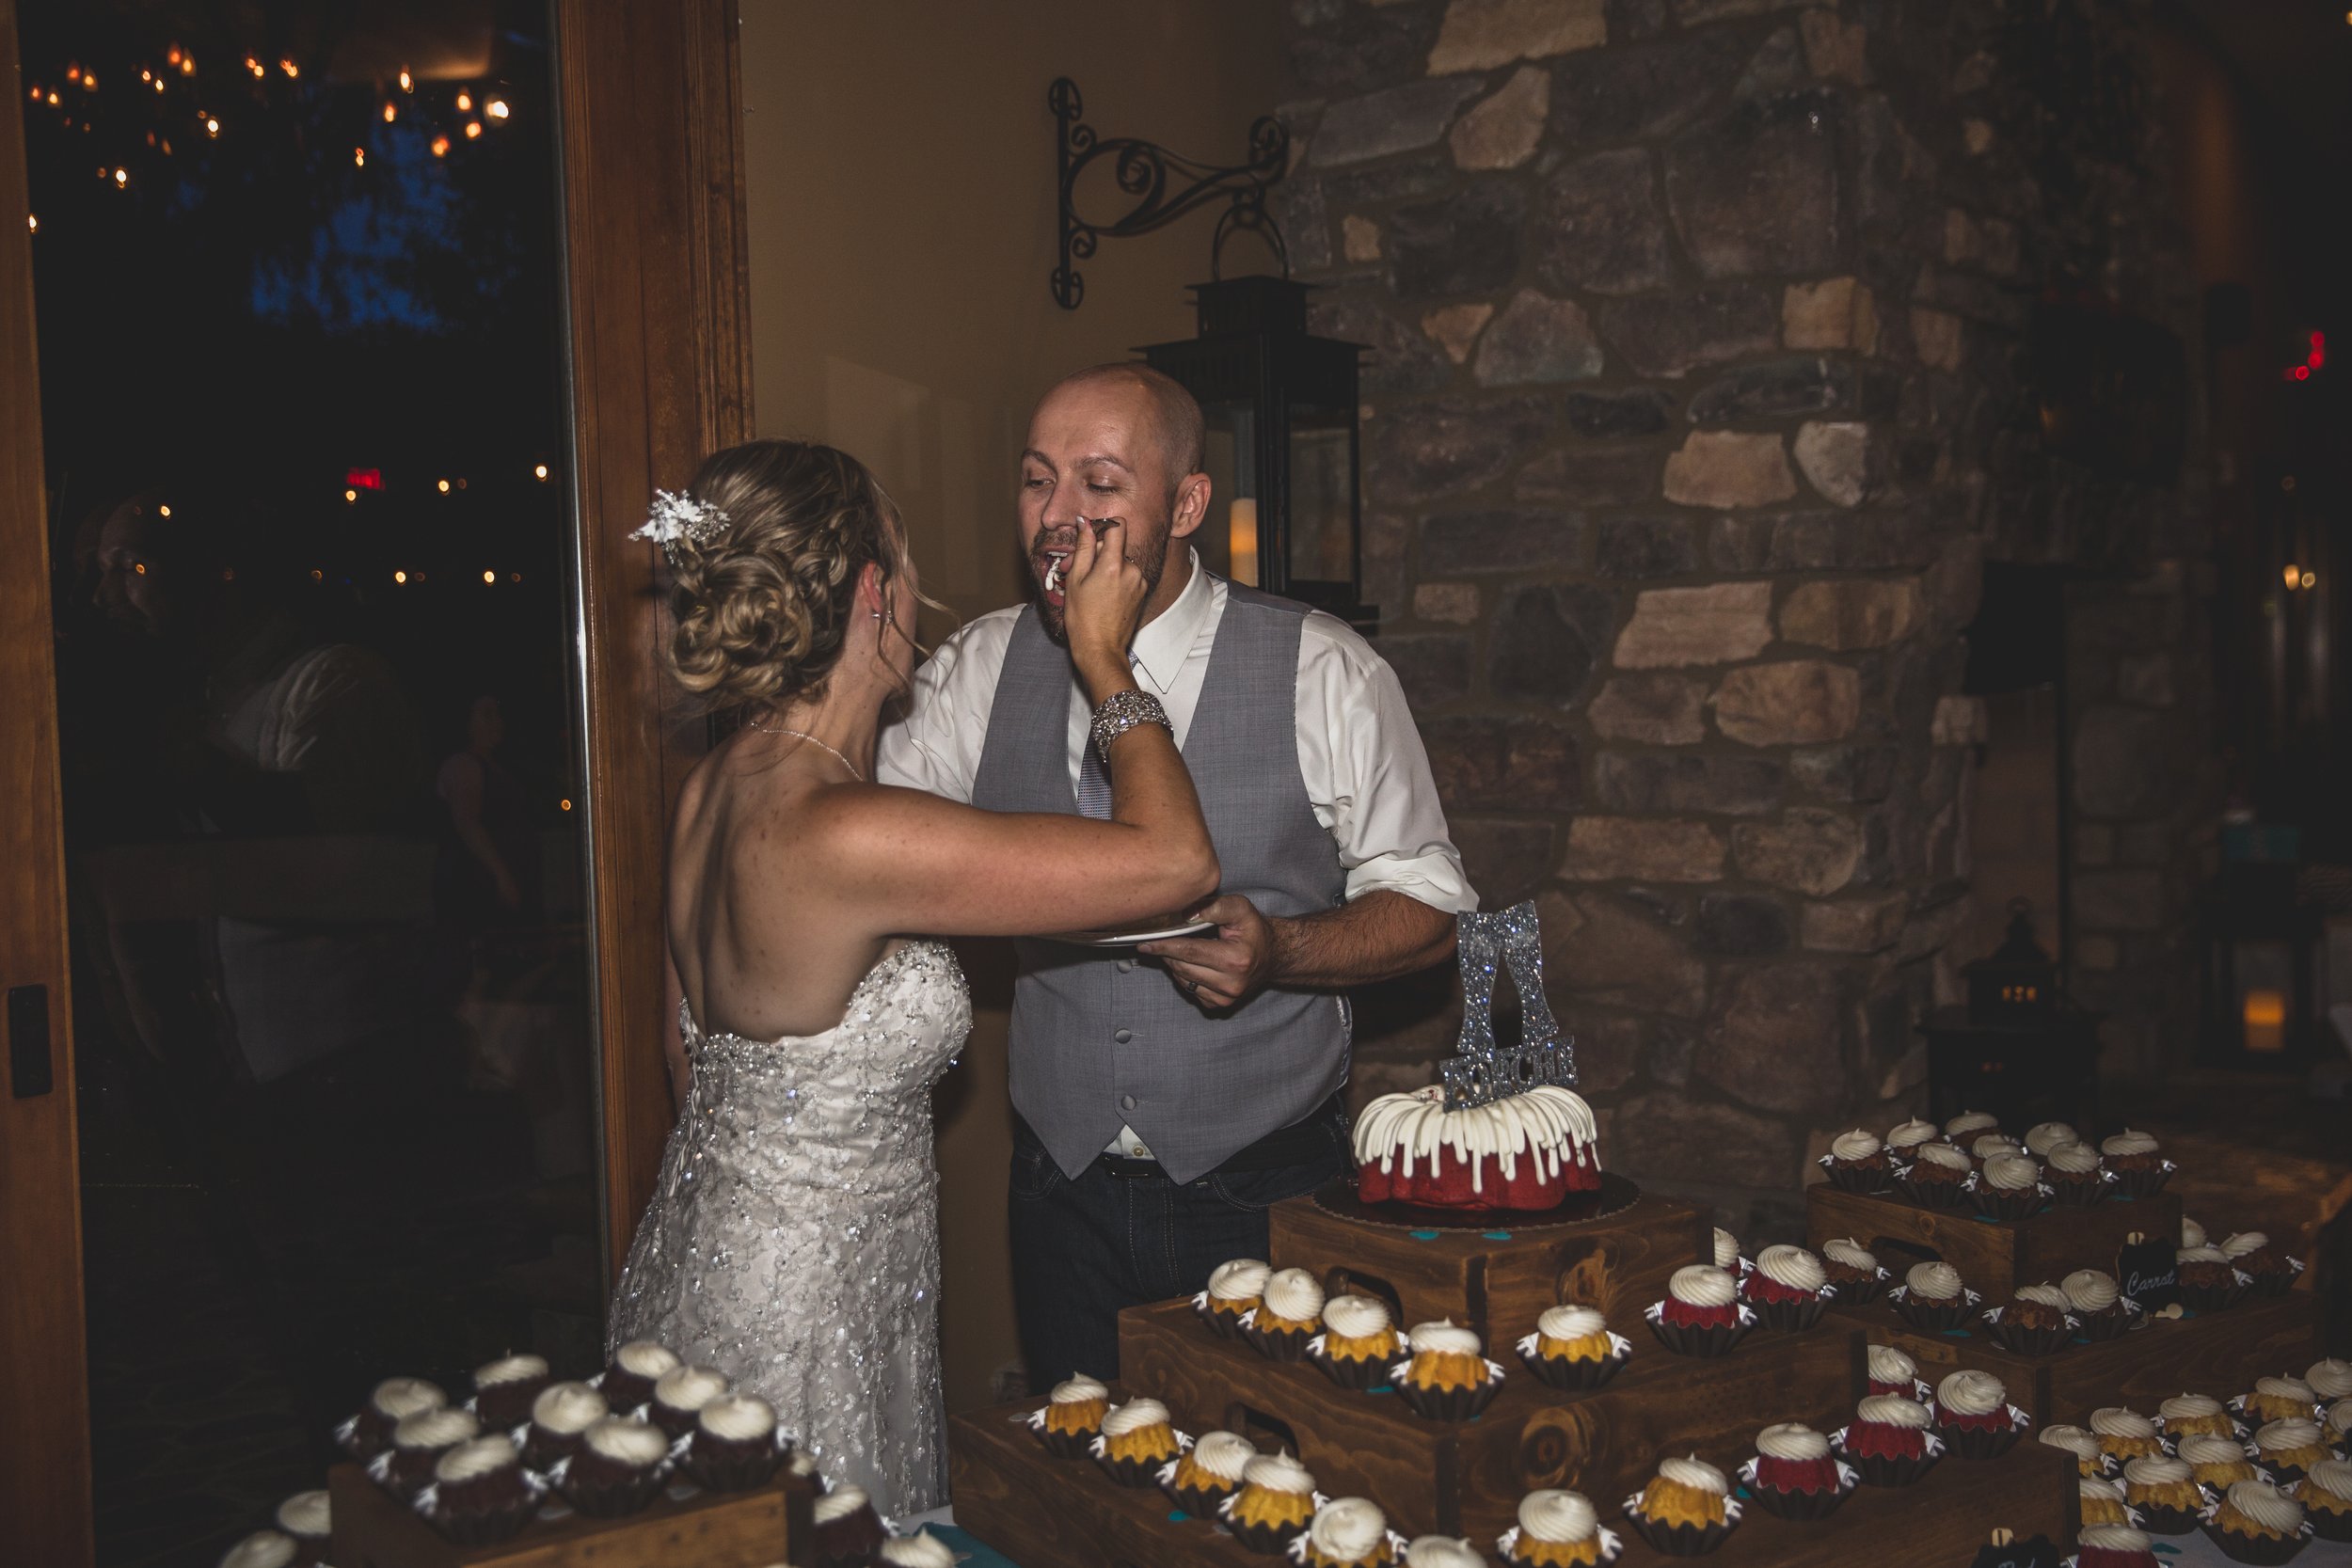  Bride and Groom cut wedding cake at Arizona wedding by Northern Arizona’s Best Wedding Photographer, Jennifer Lind Schutsky.  